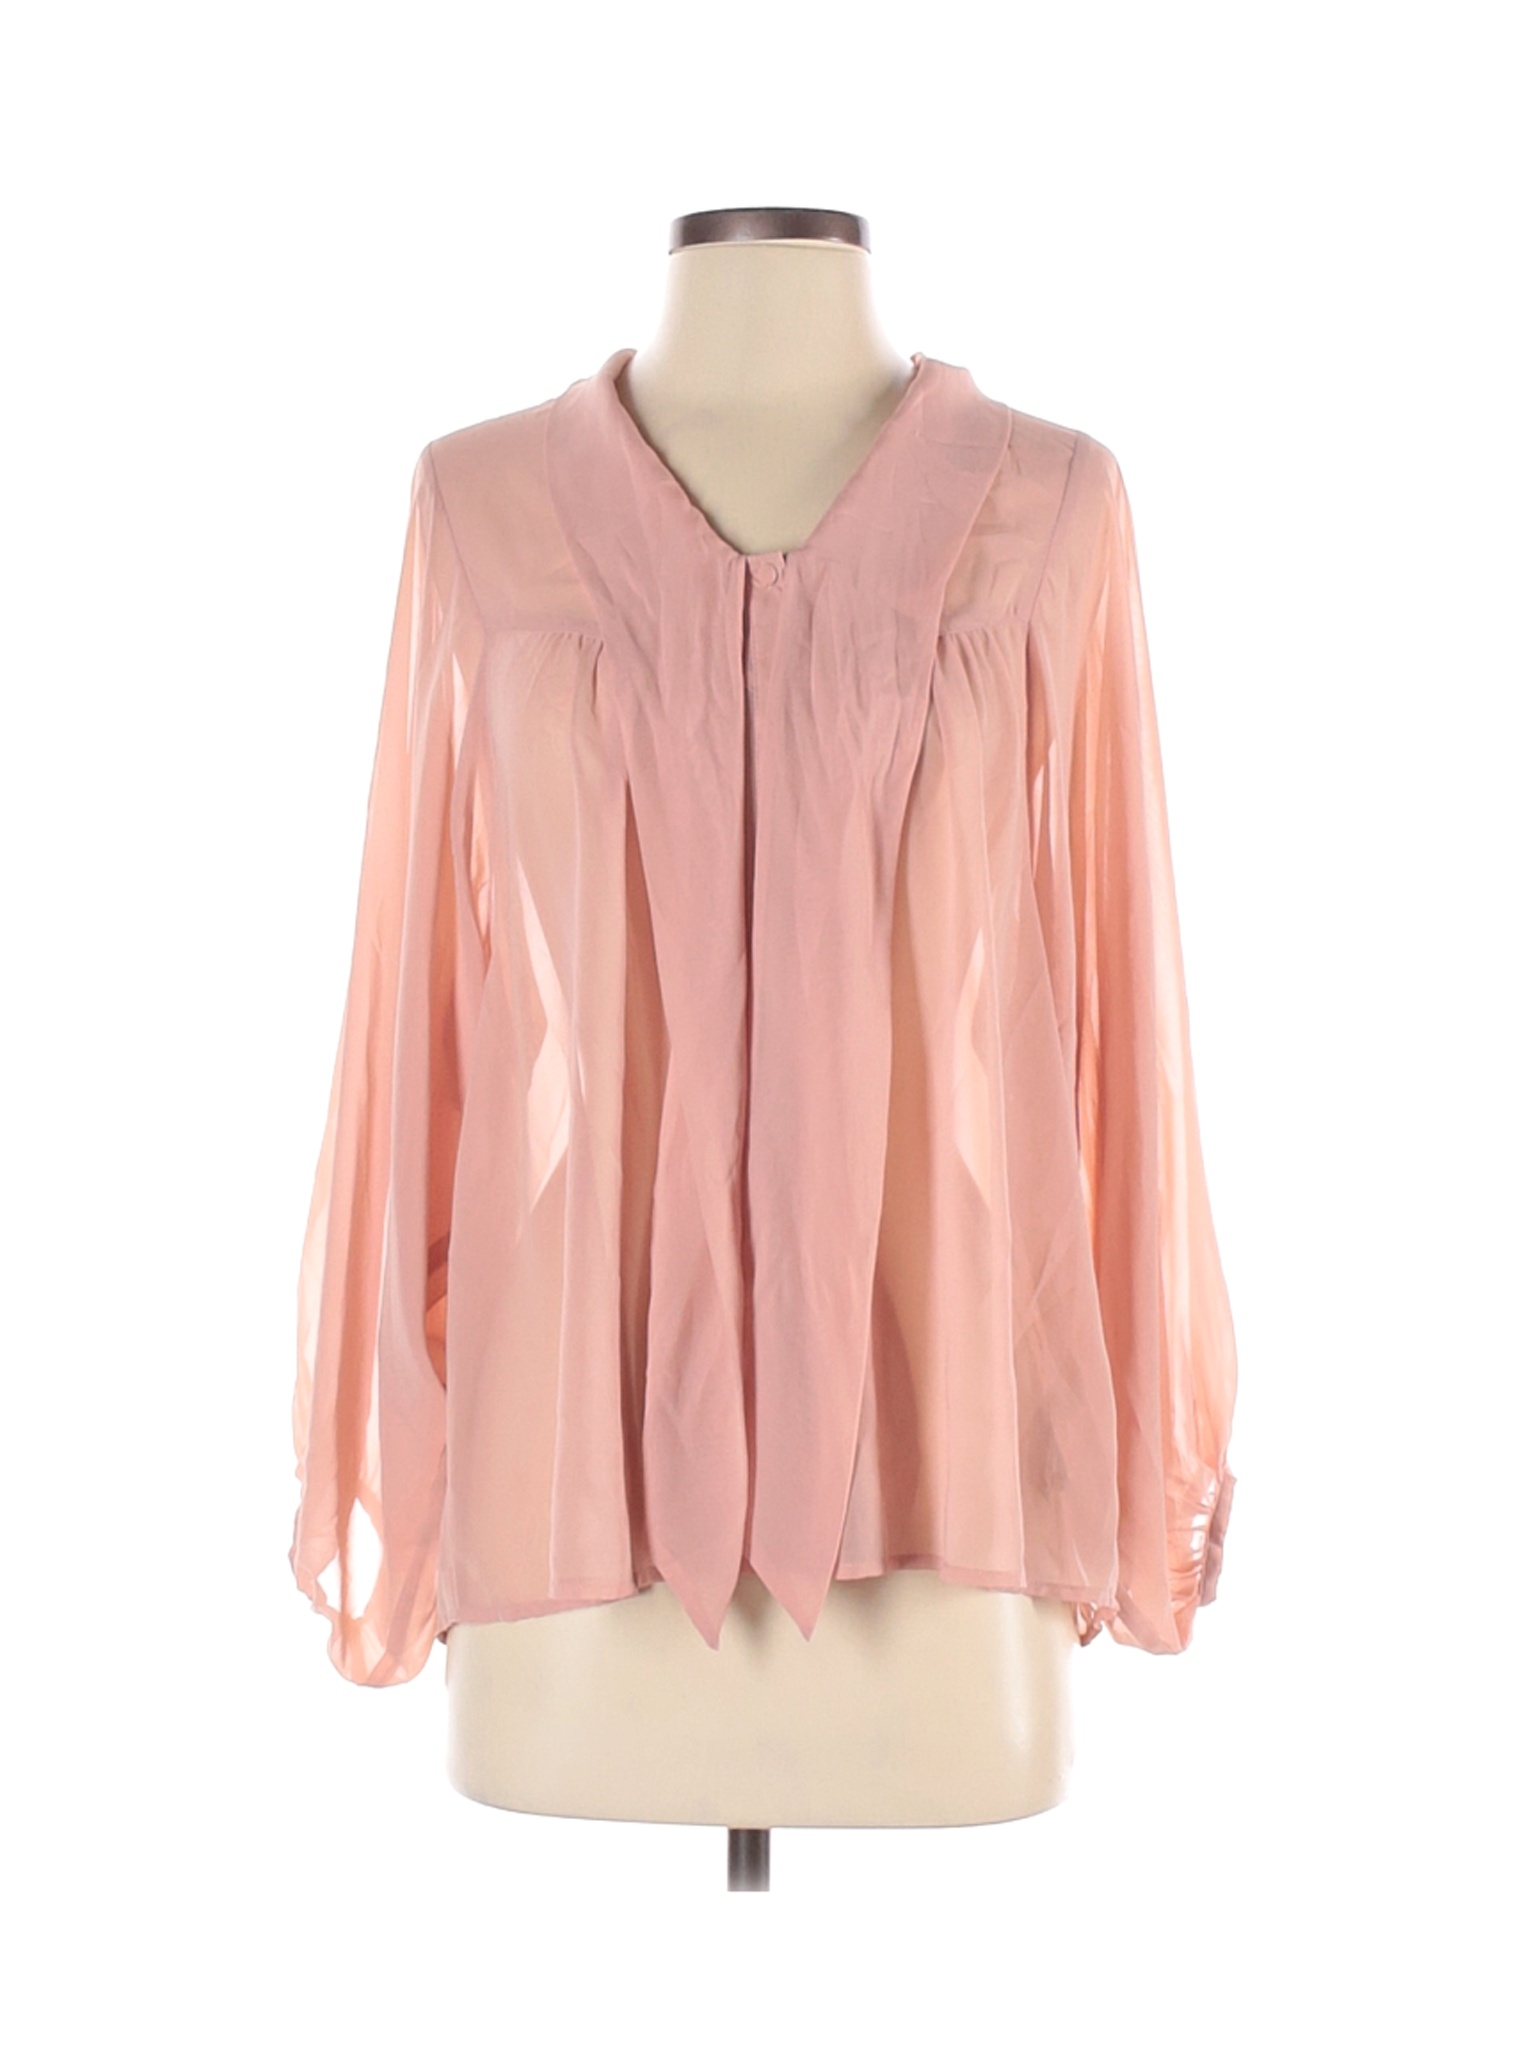 H&M Women Pink Long Sleeve Blouse 4 | eBay